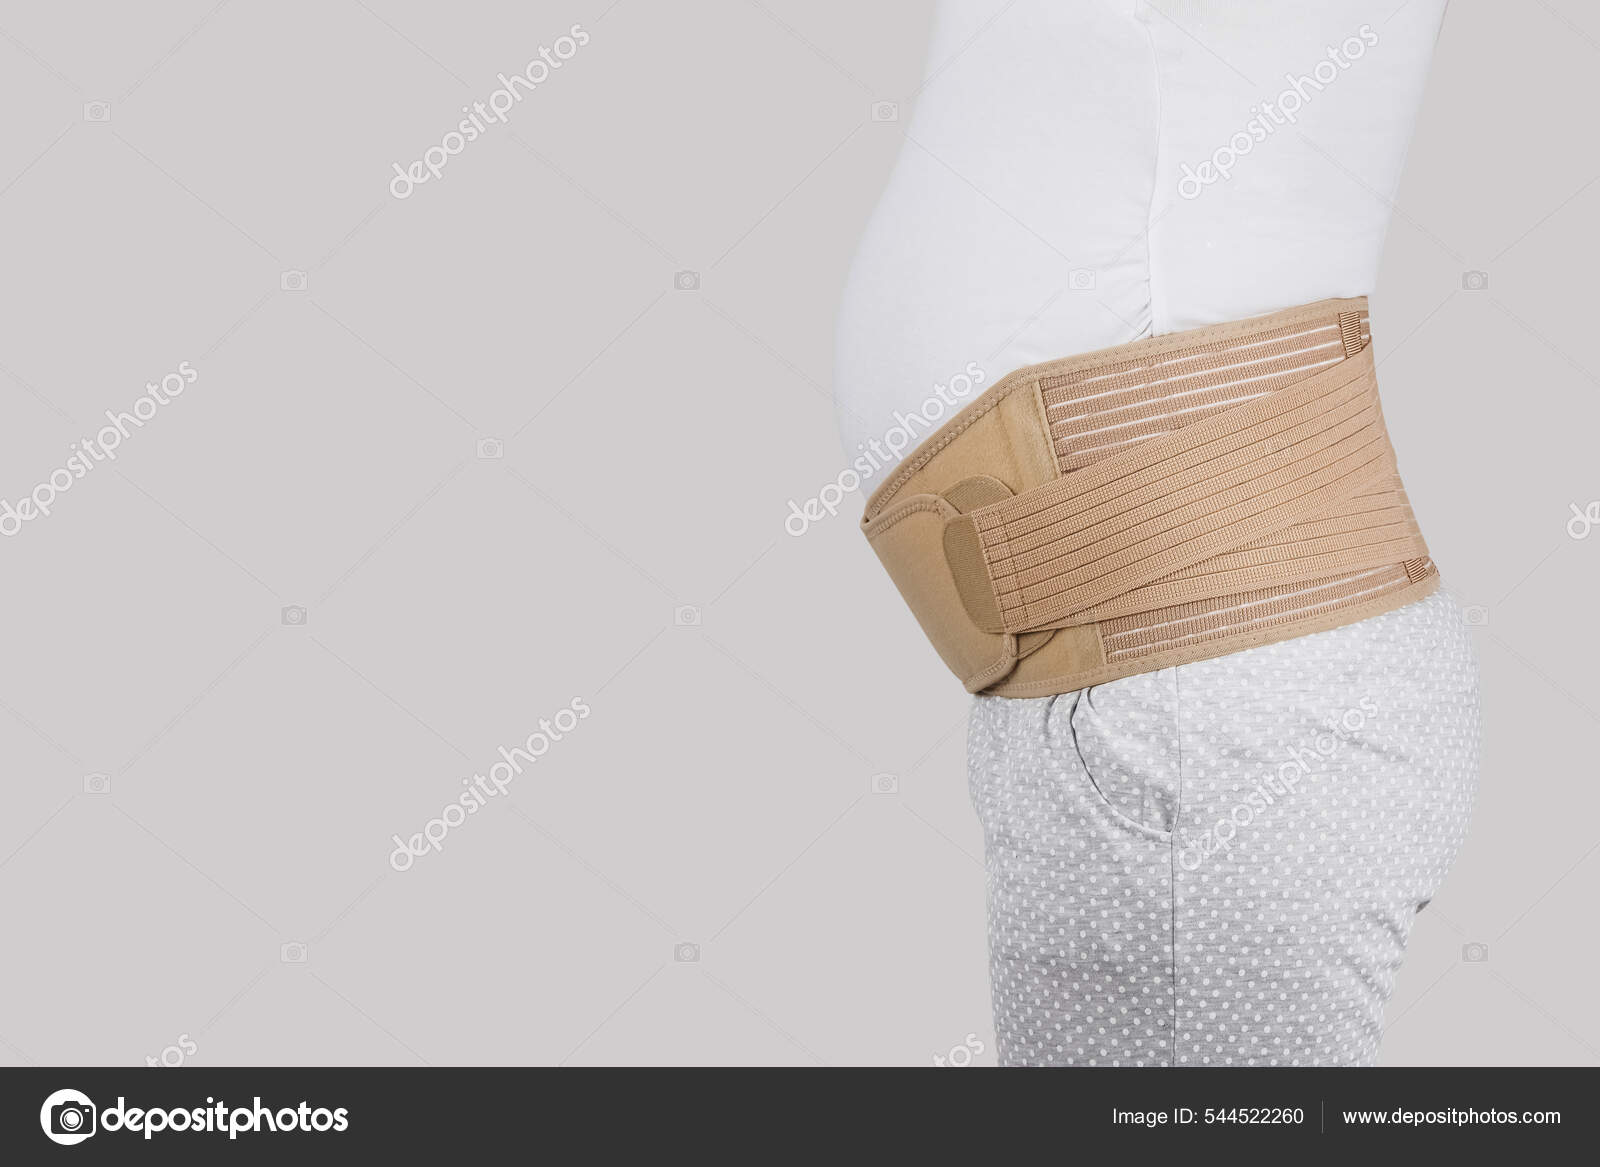 https://st.depositphotos.com/59770376/54452/i/1600/depositphotos_544522260-stock-photo-pregnant-woman-belly-in-prenatal.jpg